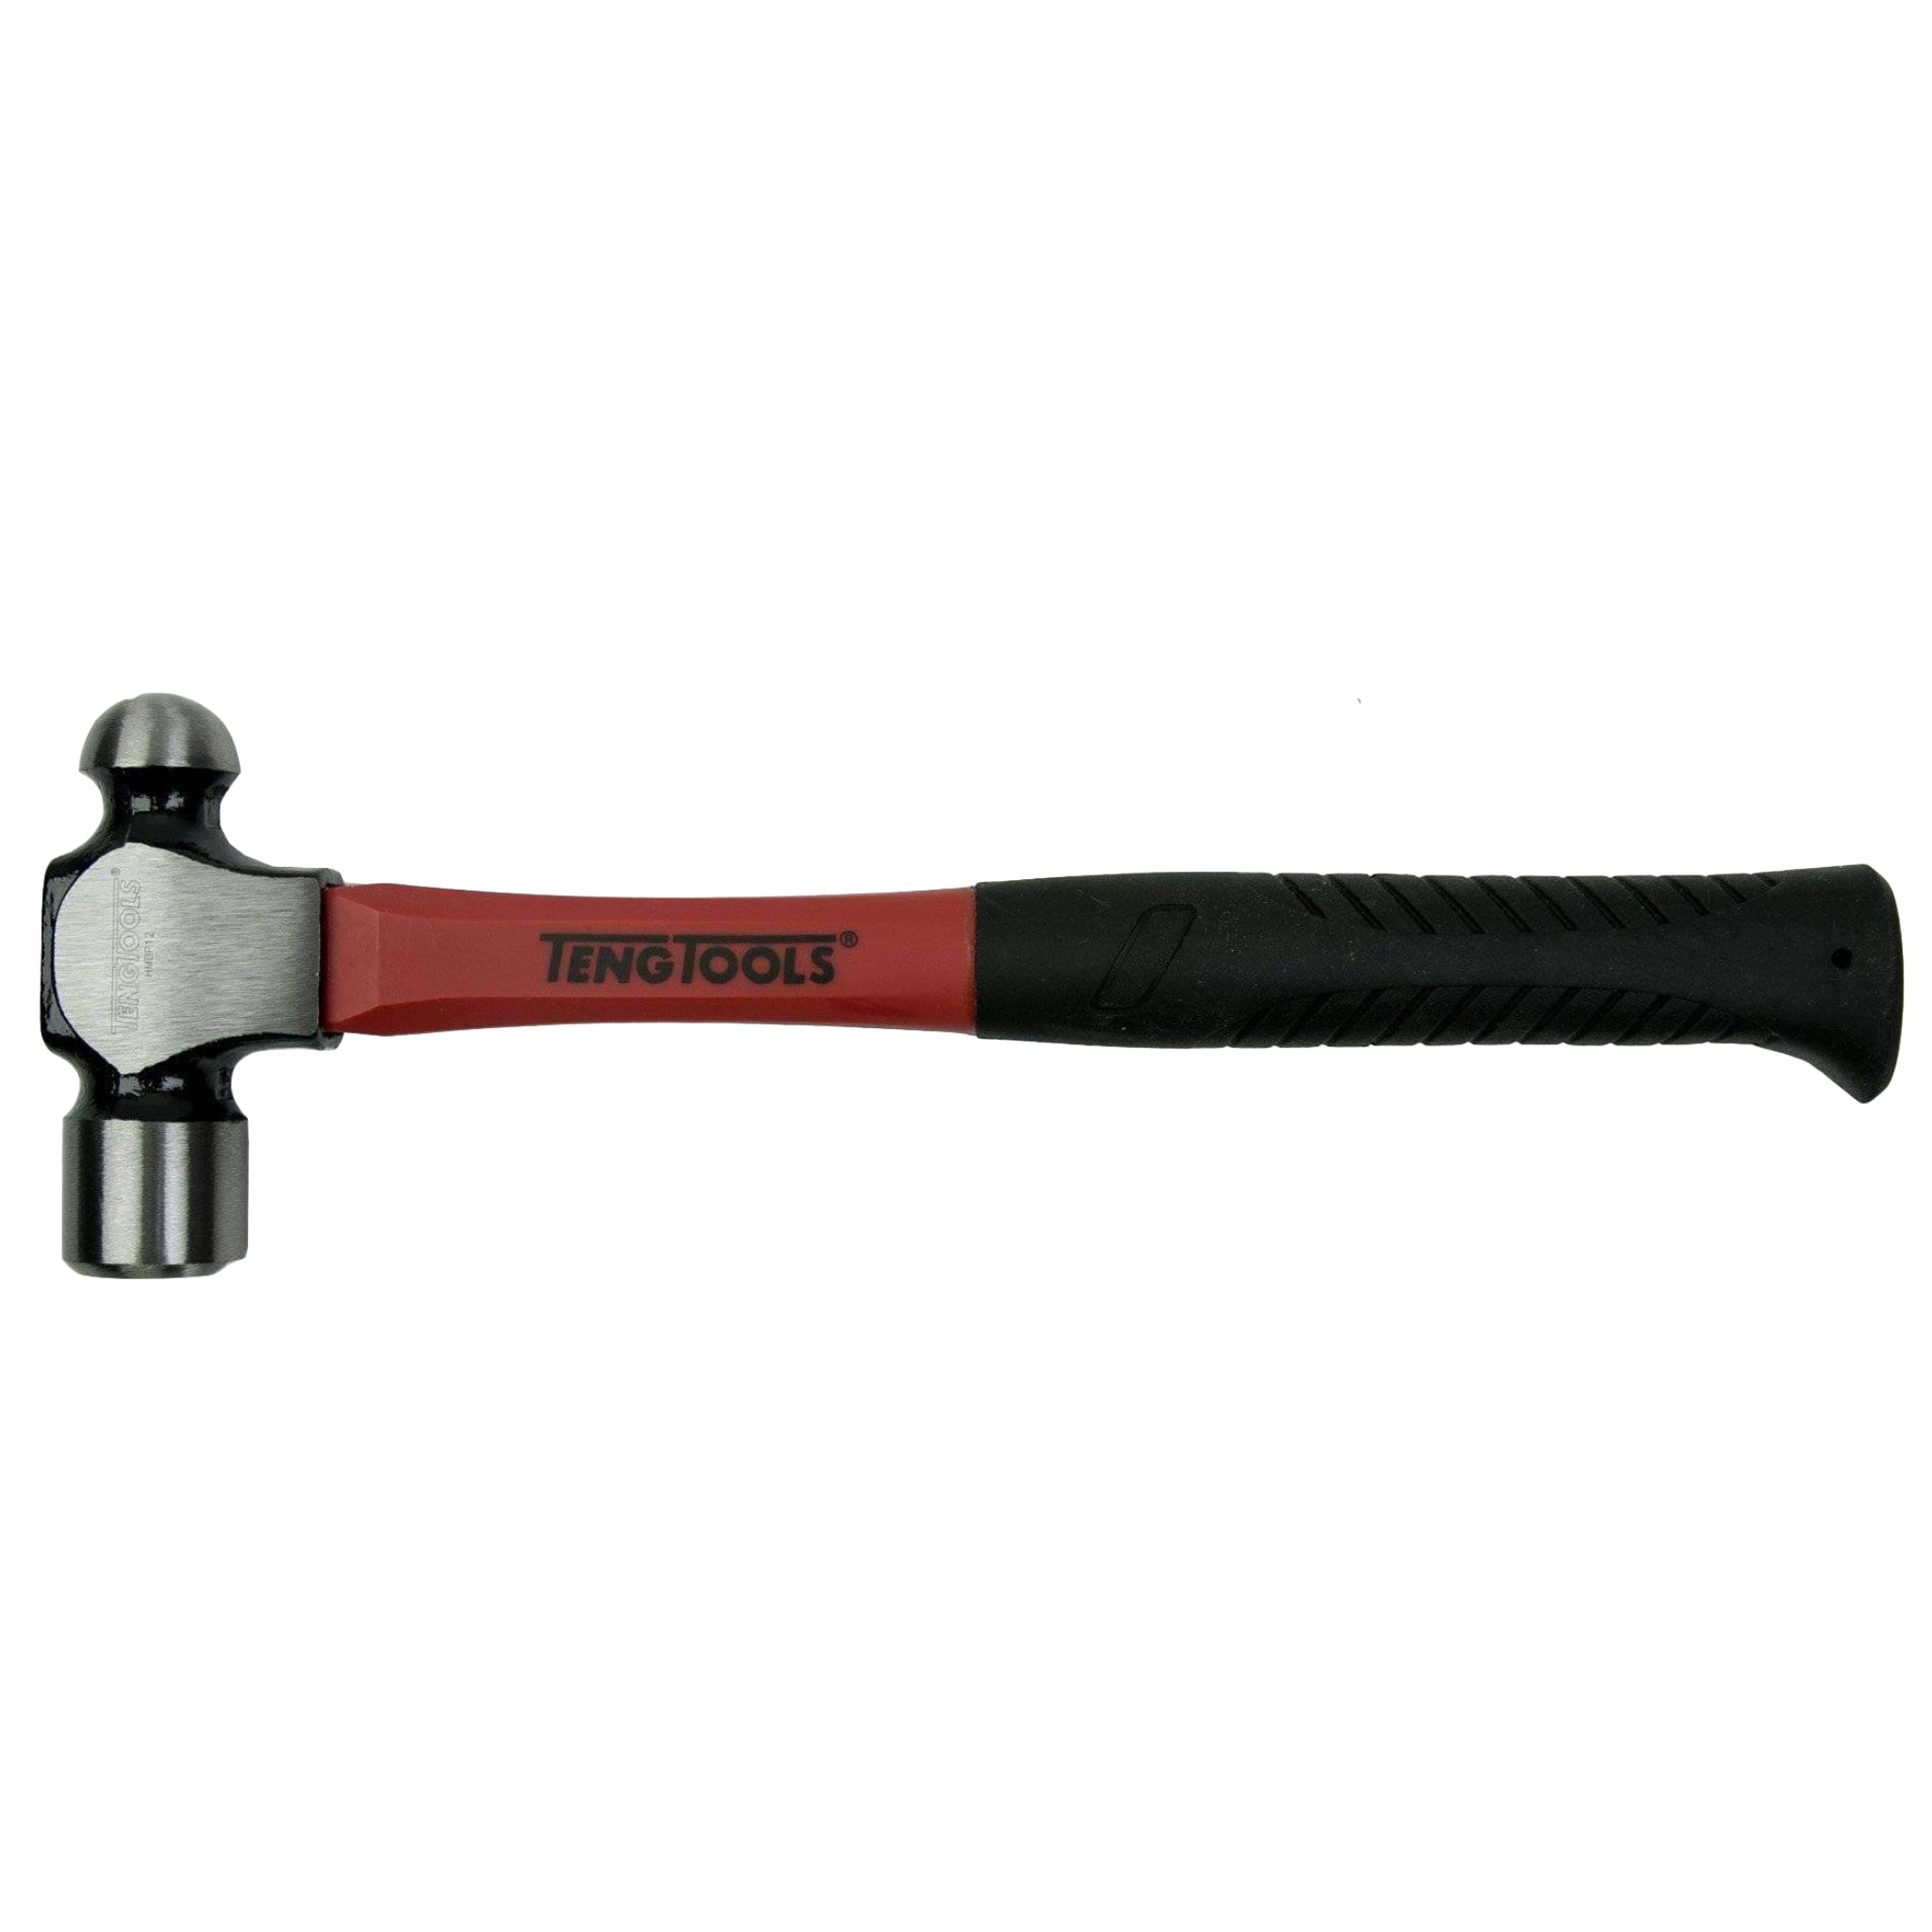 Teng Tools Ball Pein Hammer Range 12, 16, 24 And 32 Ounce (Oz) Hammers - 24 Oz